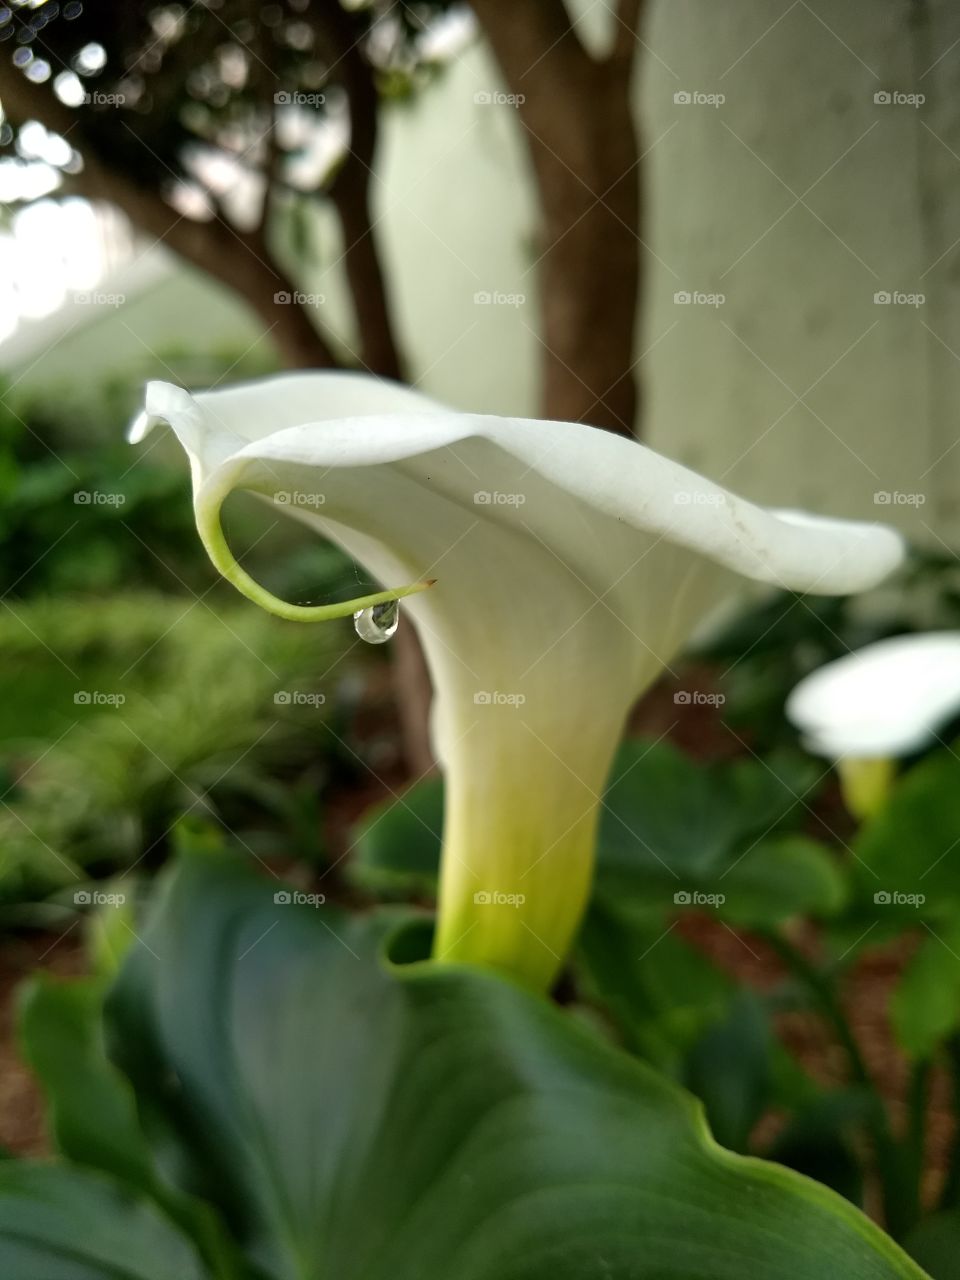 aquí una flor con una gota de agua